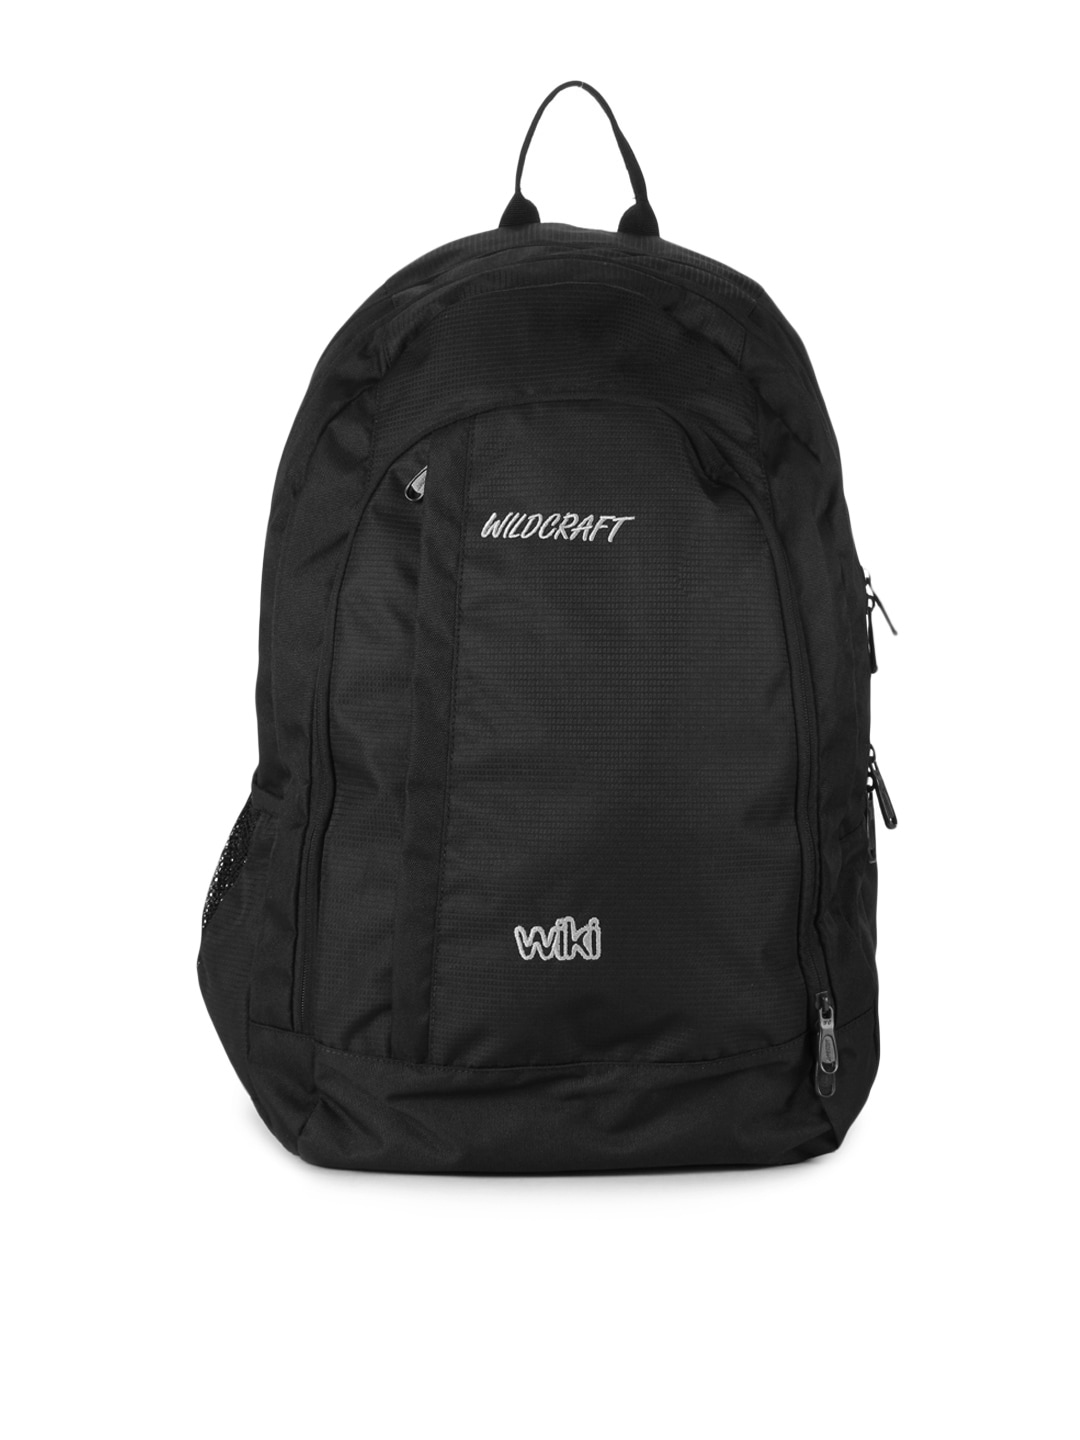 Wildcraft Unisex Black Backpack